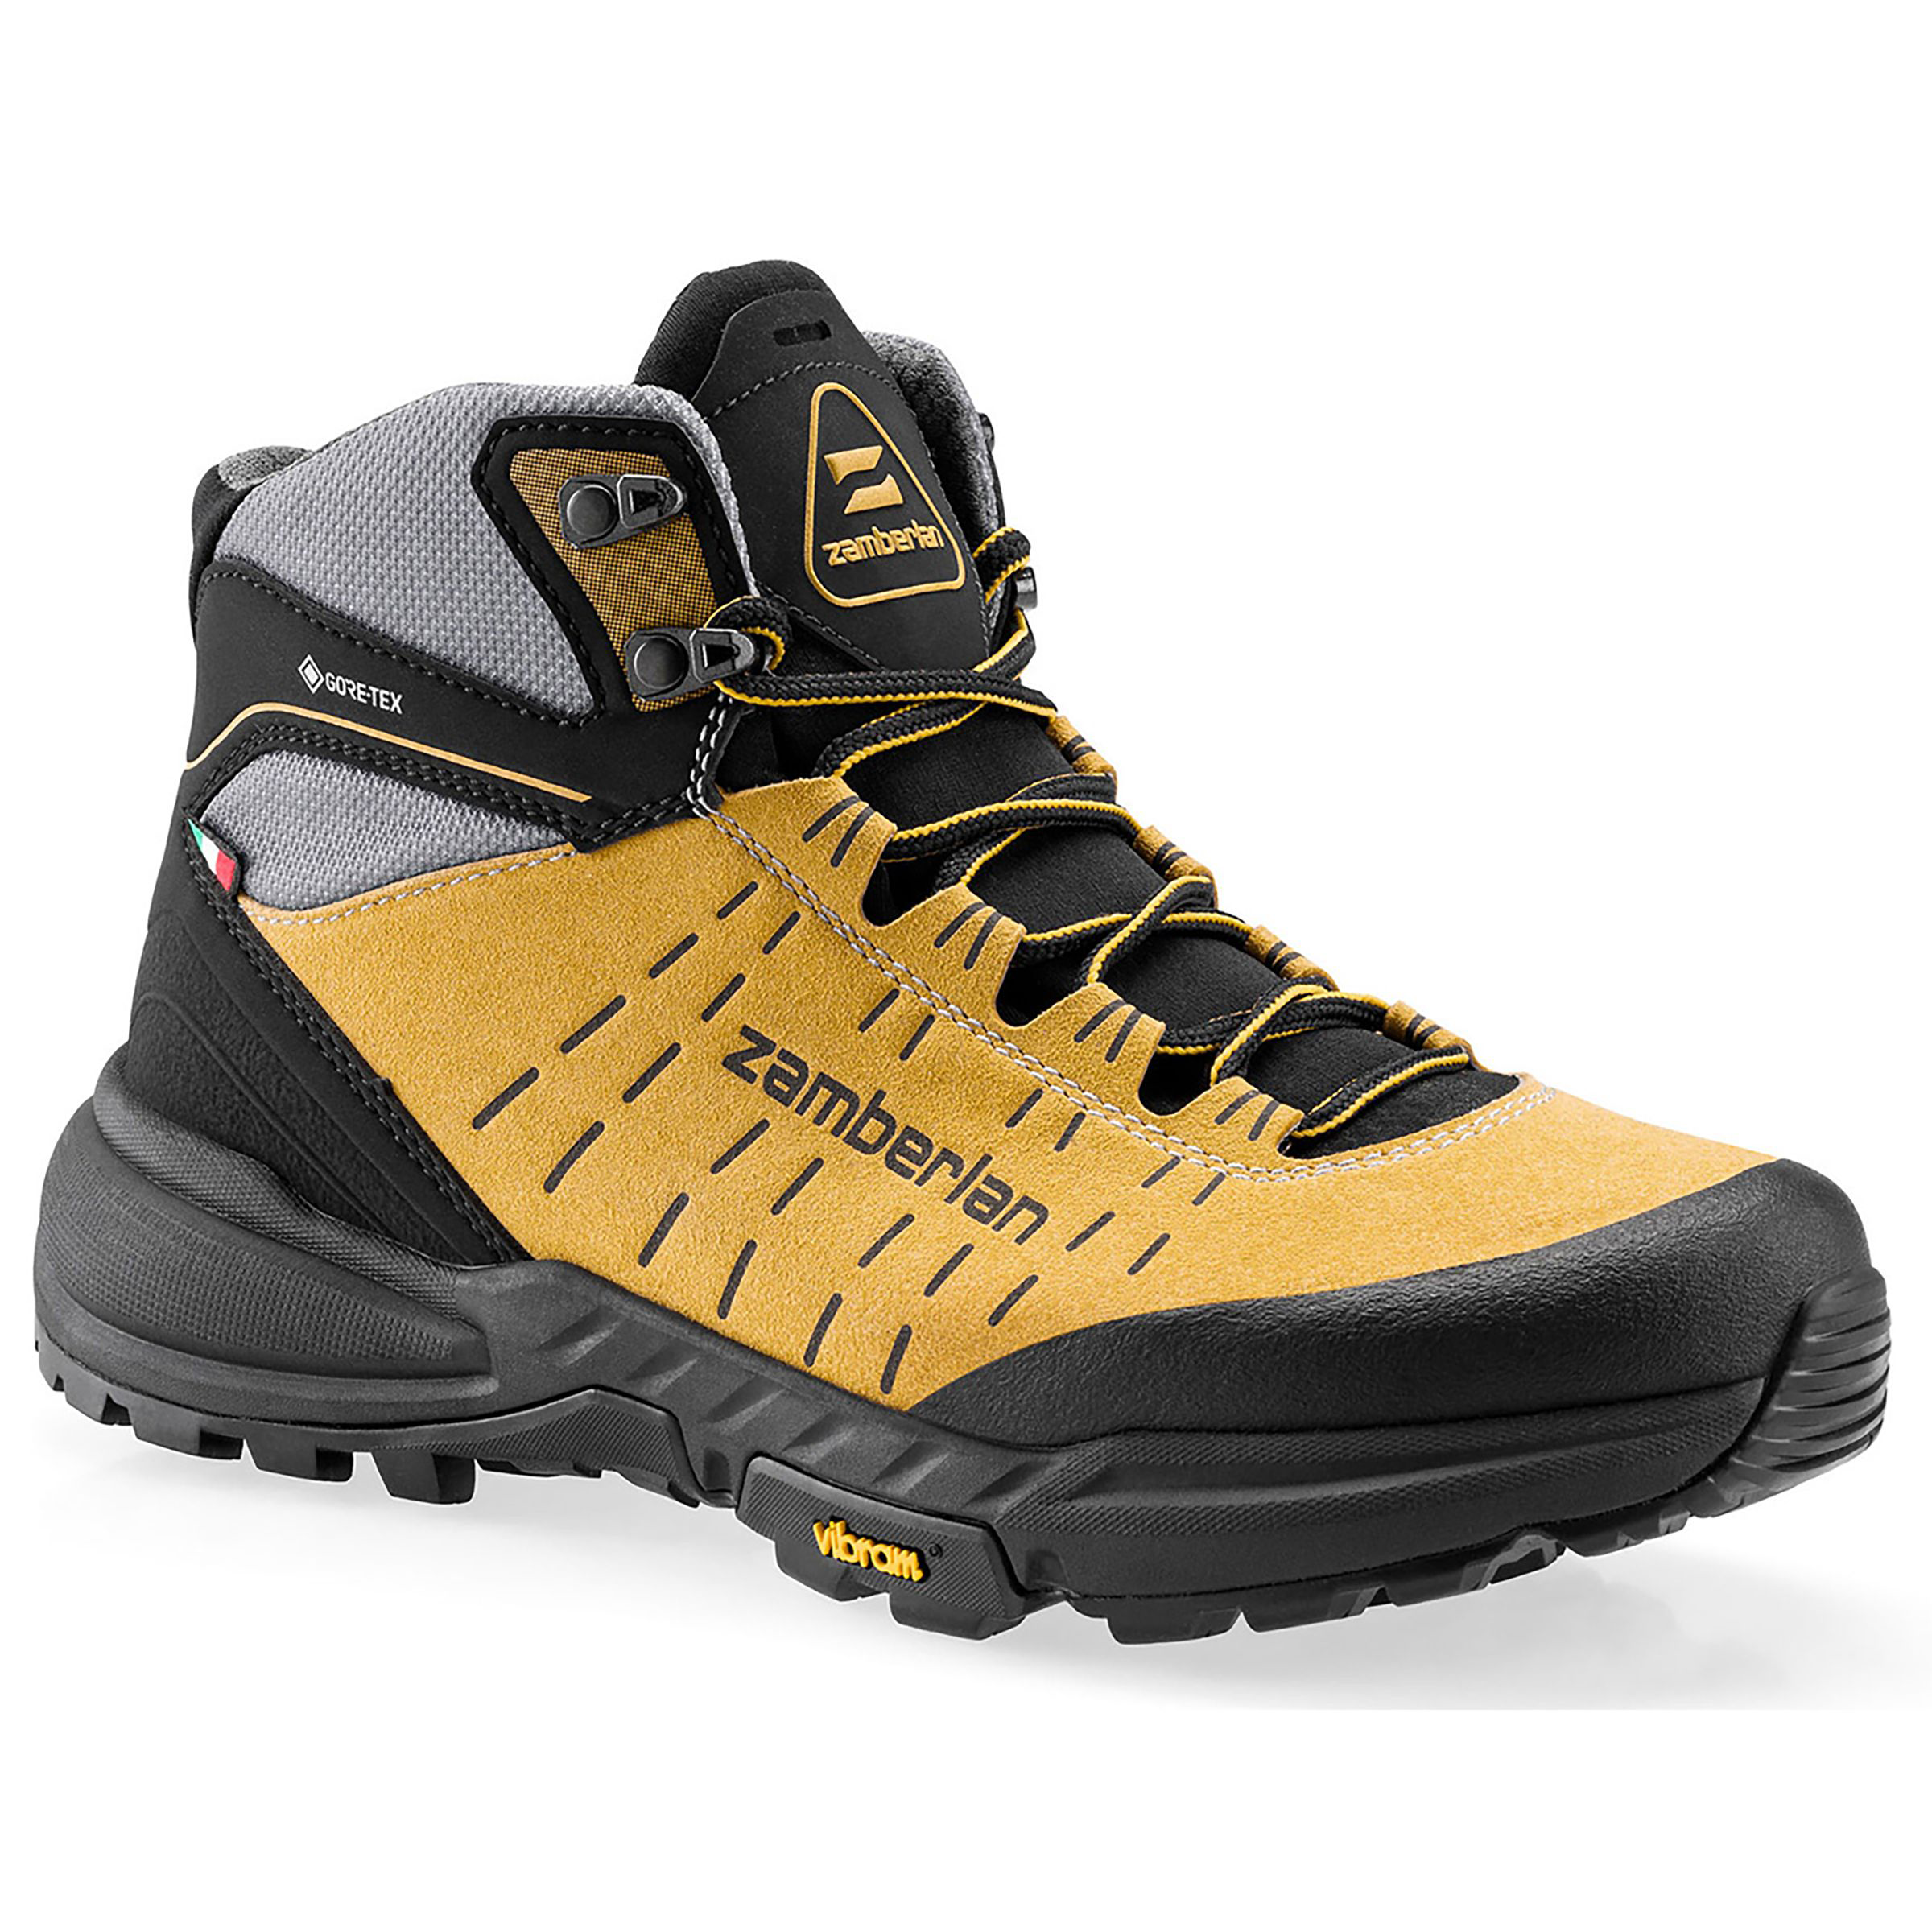 Zamberlan 334 Circe GTX Waterproof Hiking Boots for Ladies - Yellow - 6M